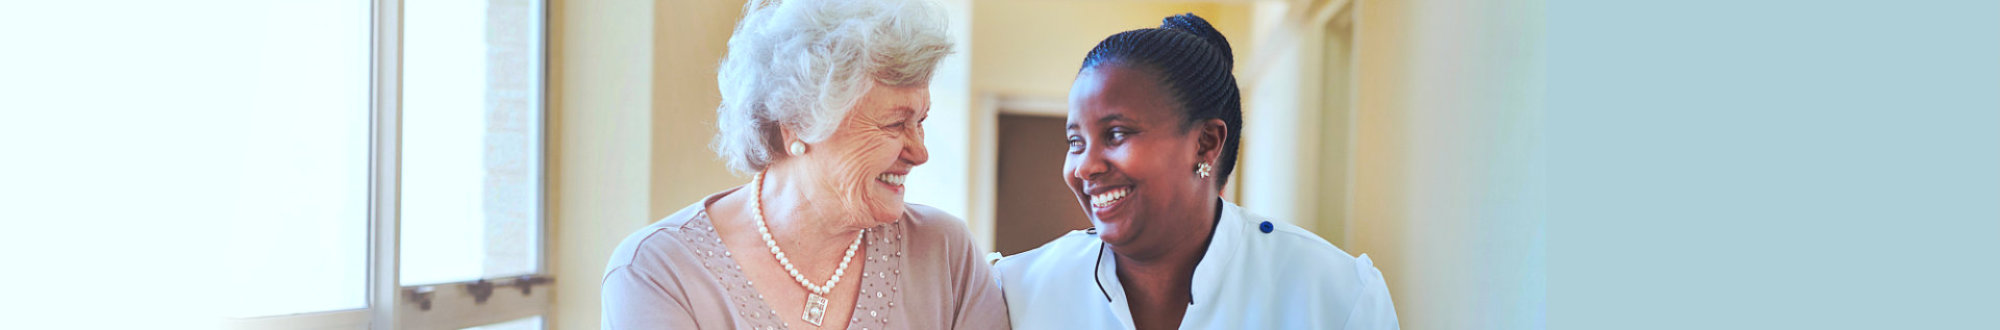 smiling home caregiver and senior women walking together